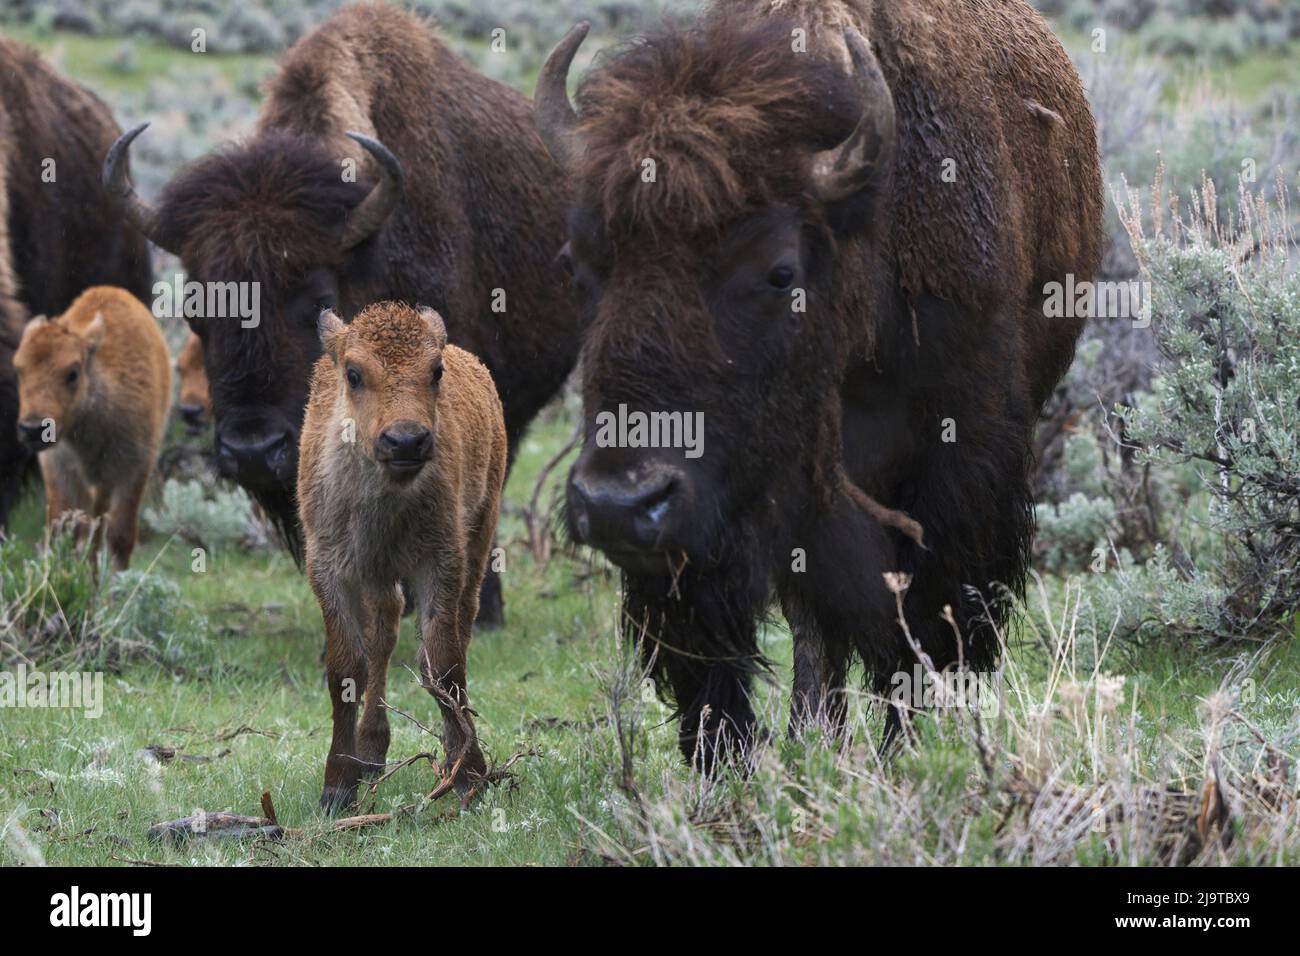 USA, Wyoming, Yellowstone National Park. Bison cow with newborn calf. Stock Photo